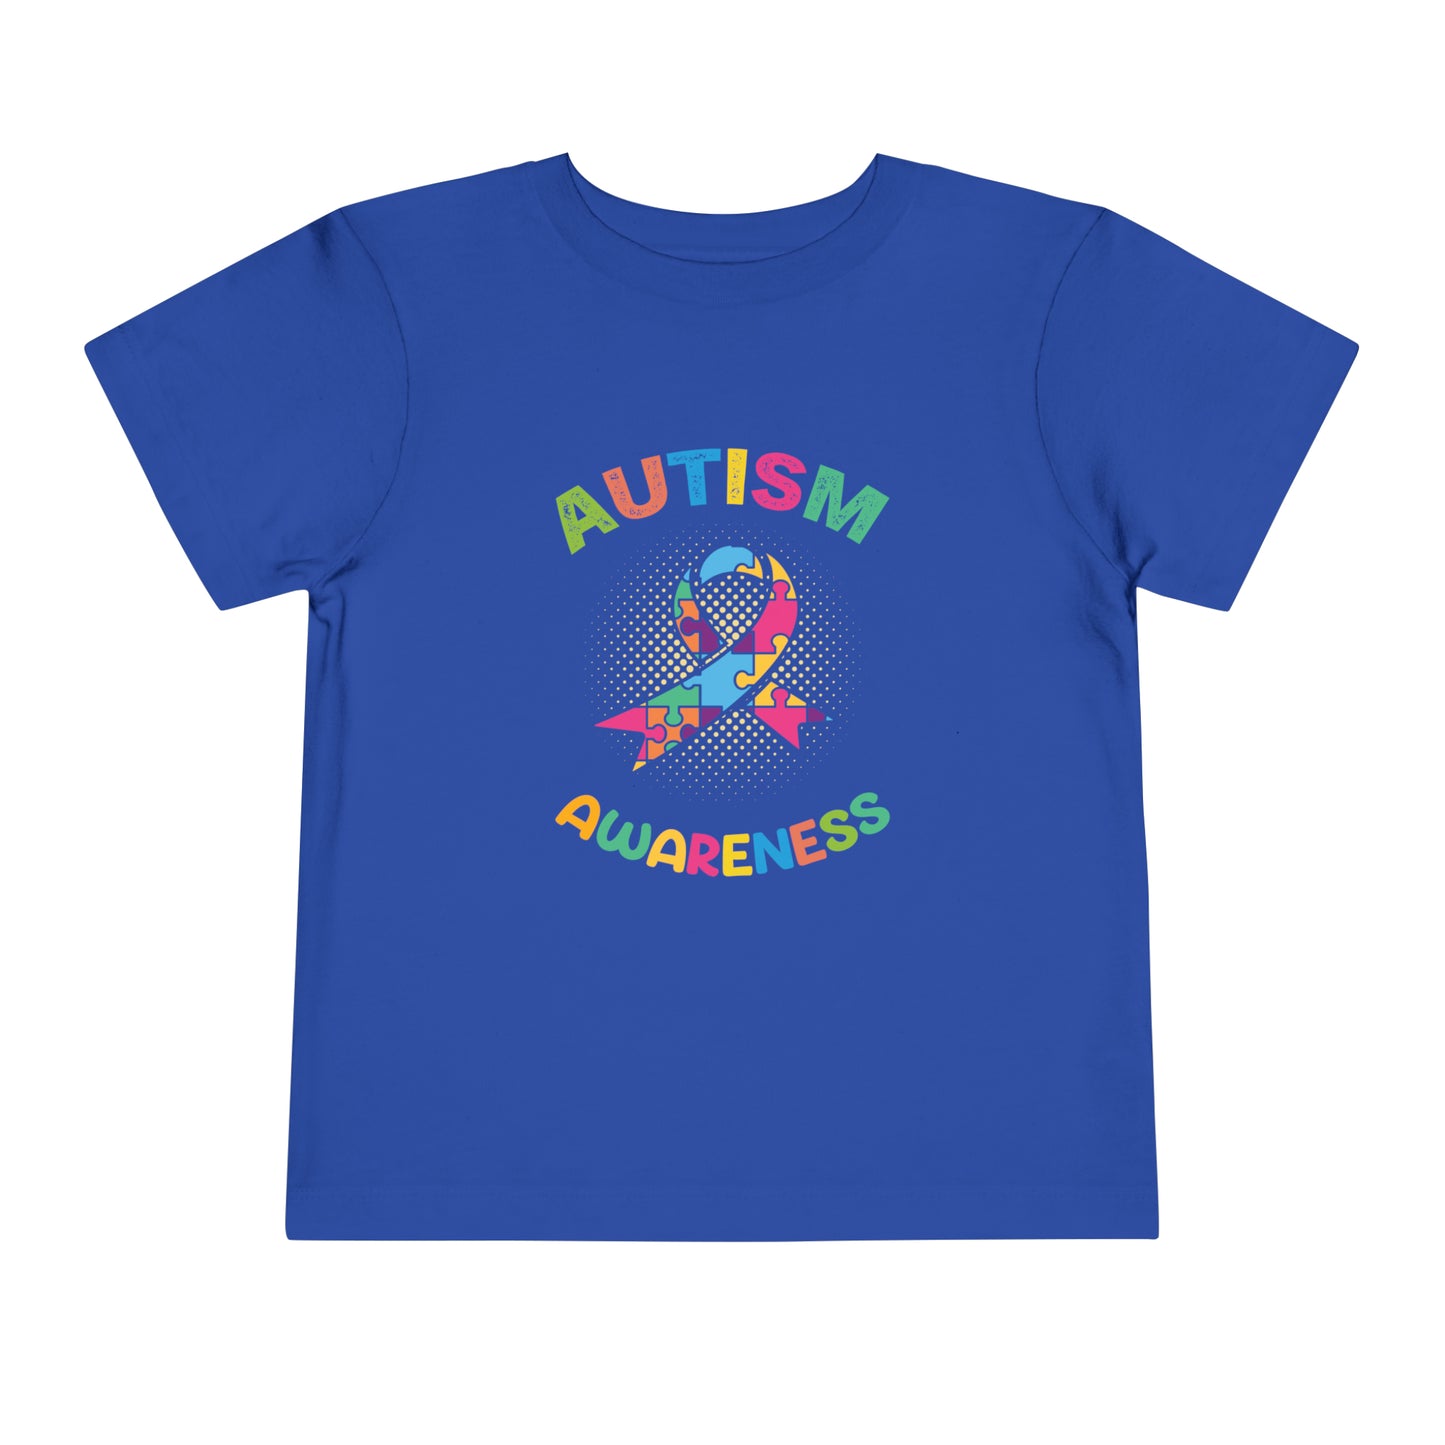 Autism Awareness Advocate Toddler Short Sleeve Tee